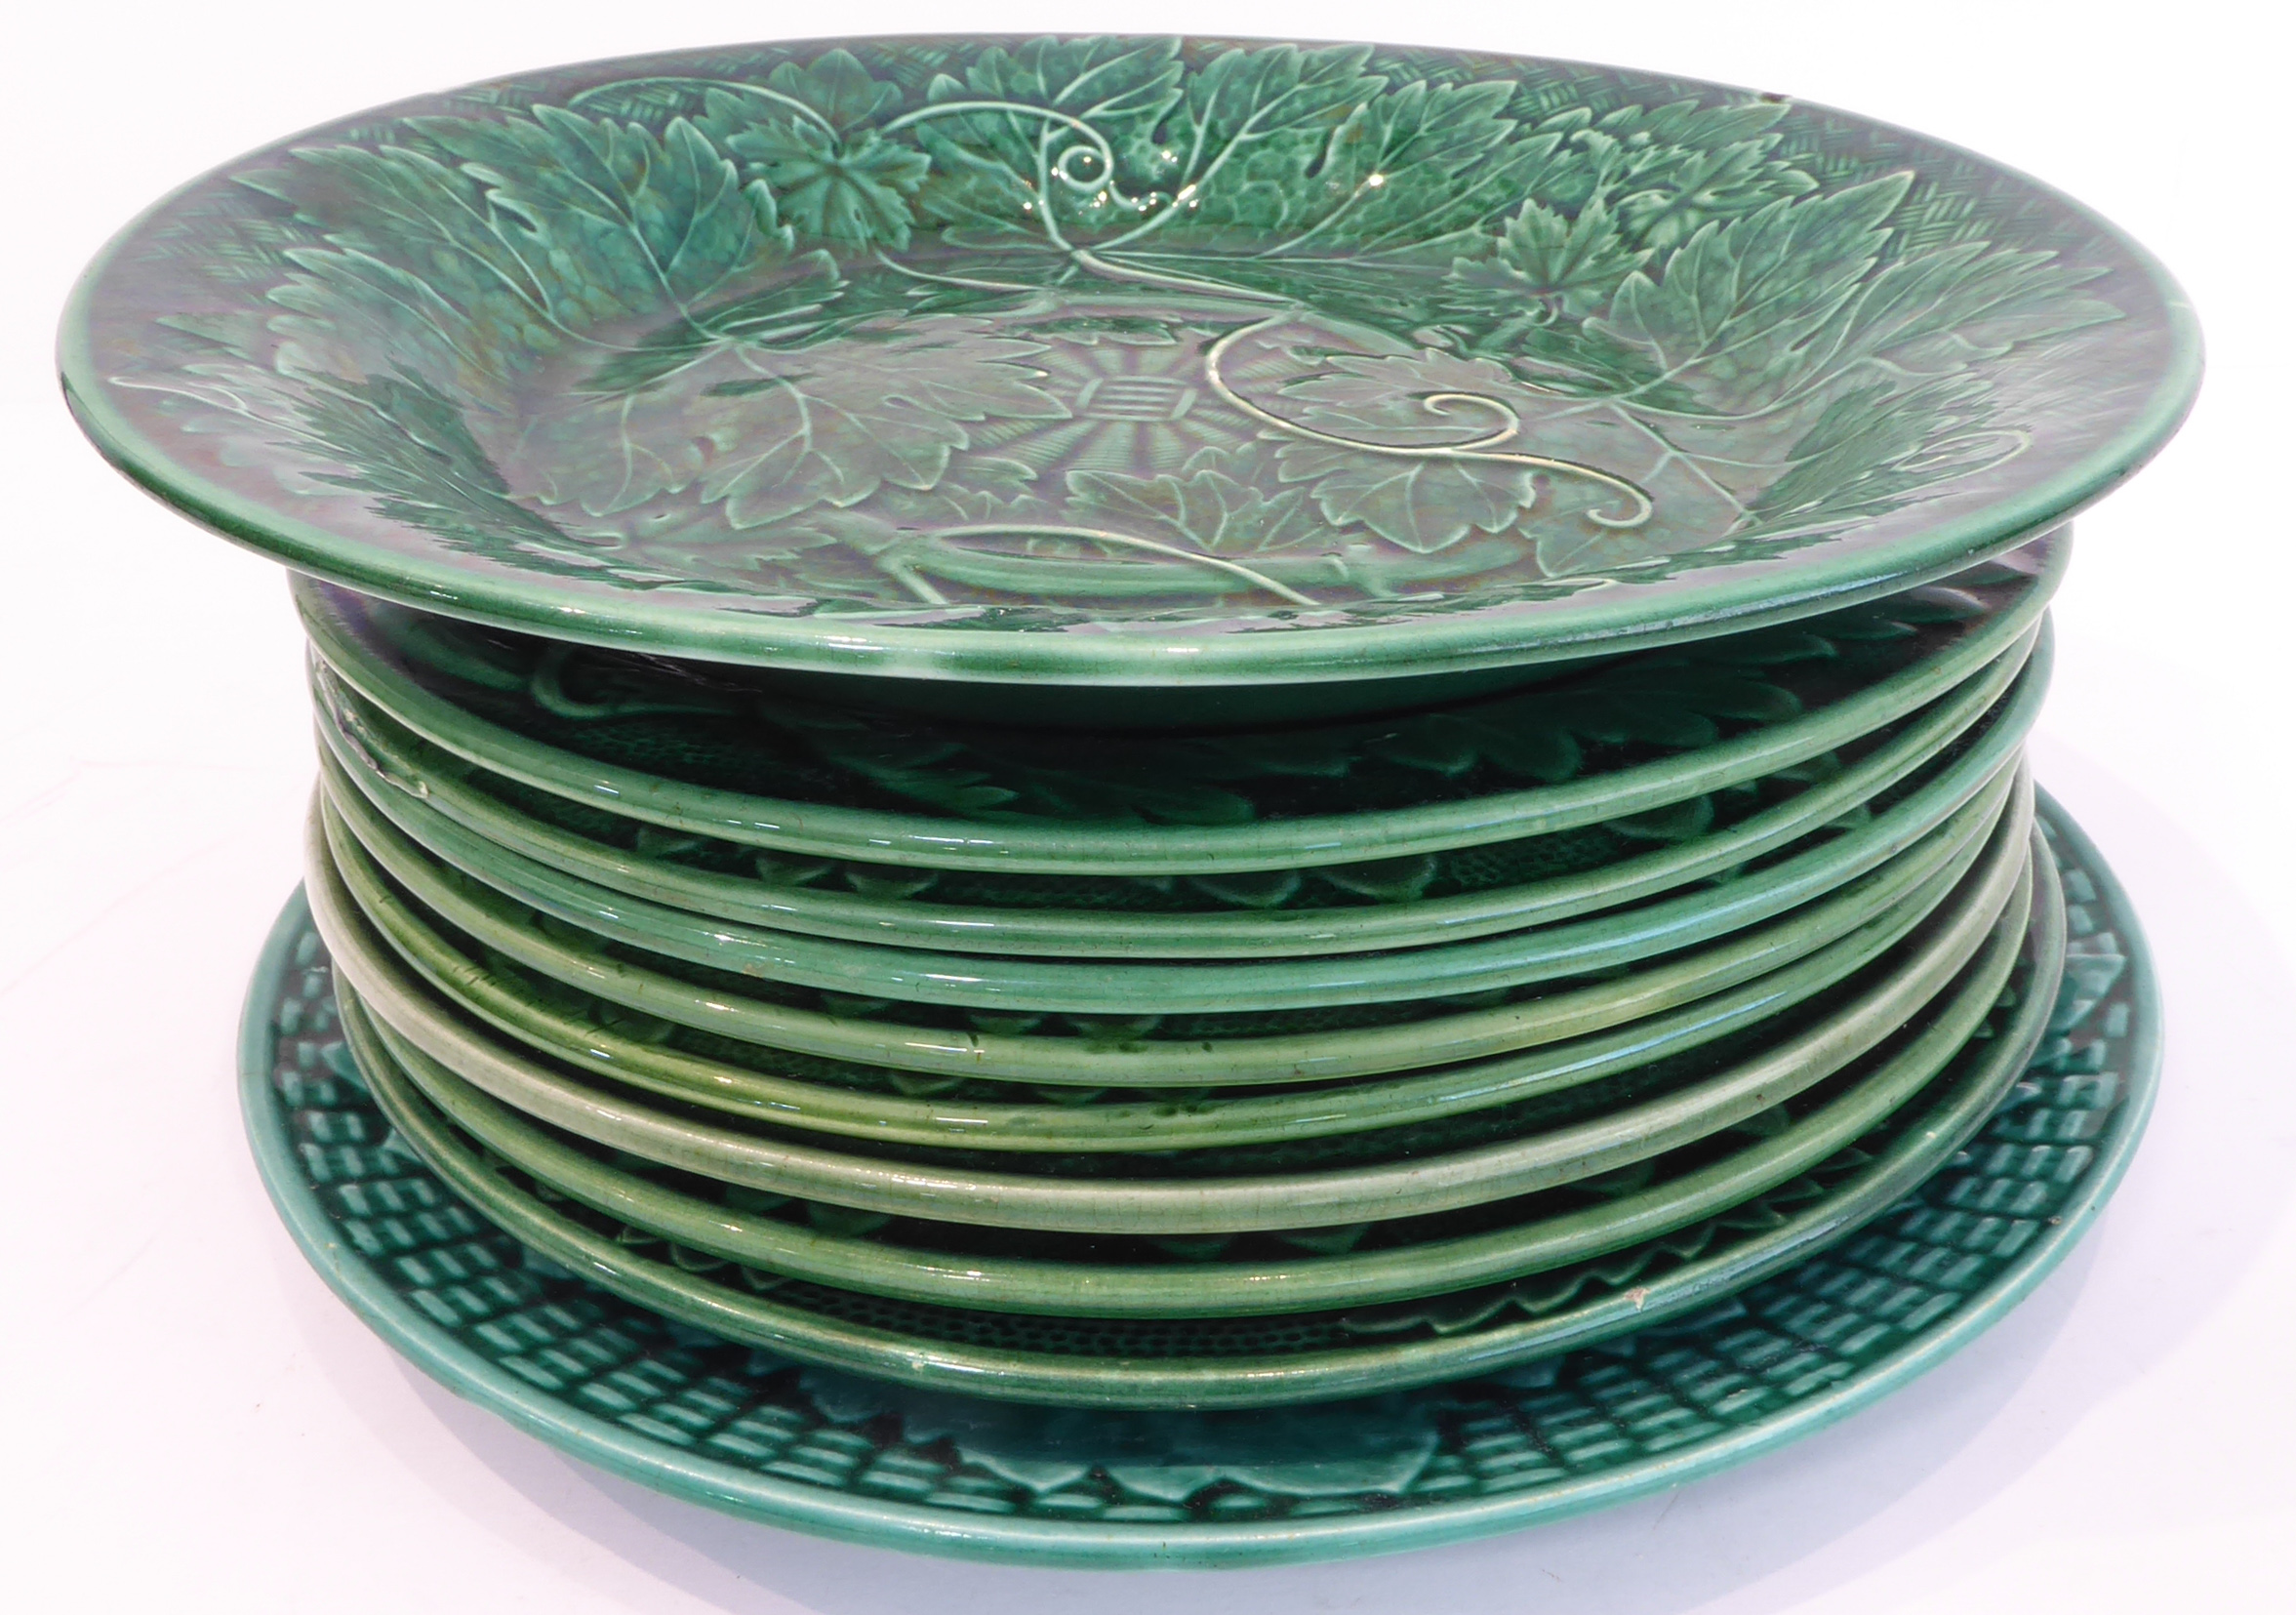 Nine 19th century green vine leaf majolica plates (19 cm) and a Wedgwood green vine leaf bowl with